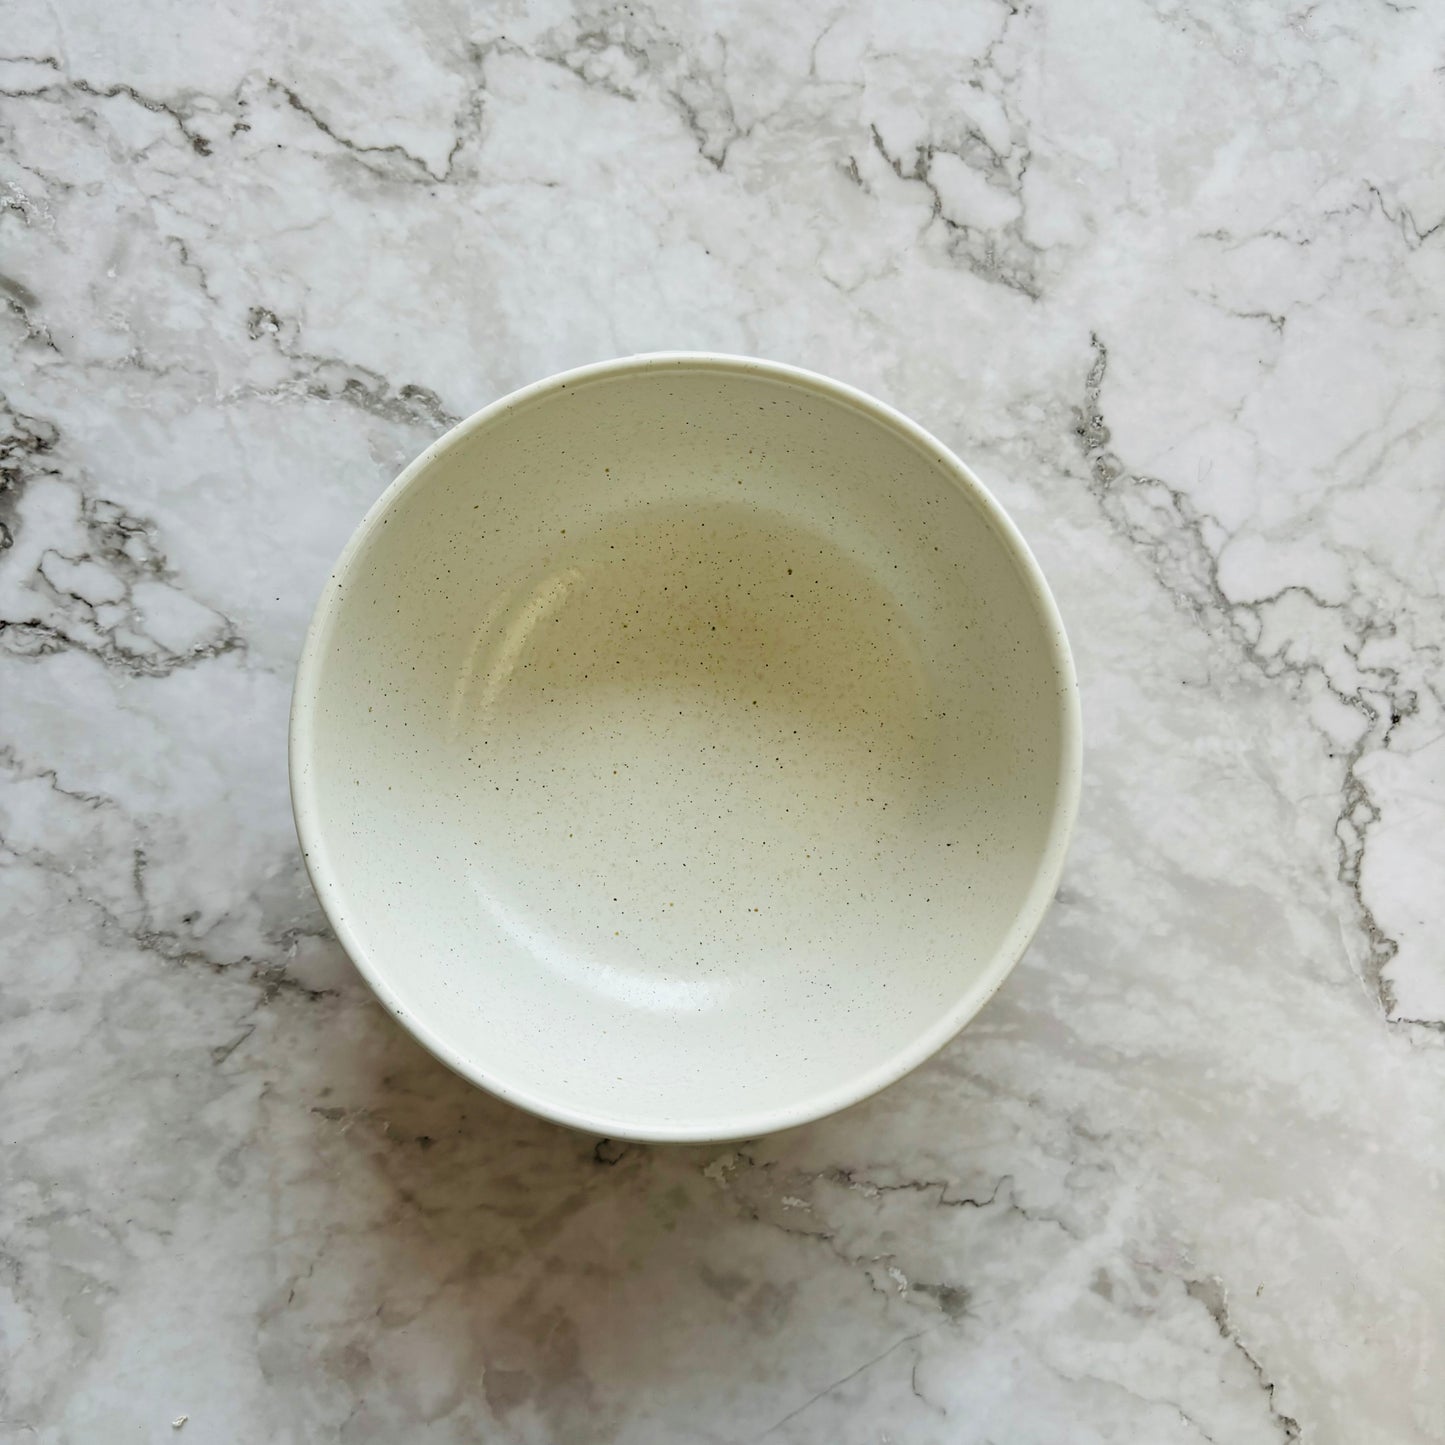 Ivory speckled bowl